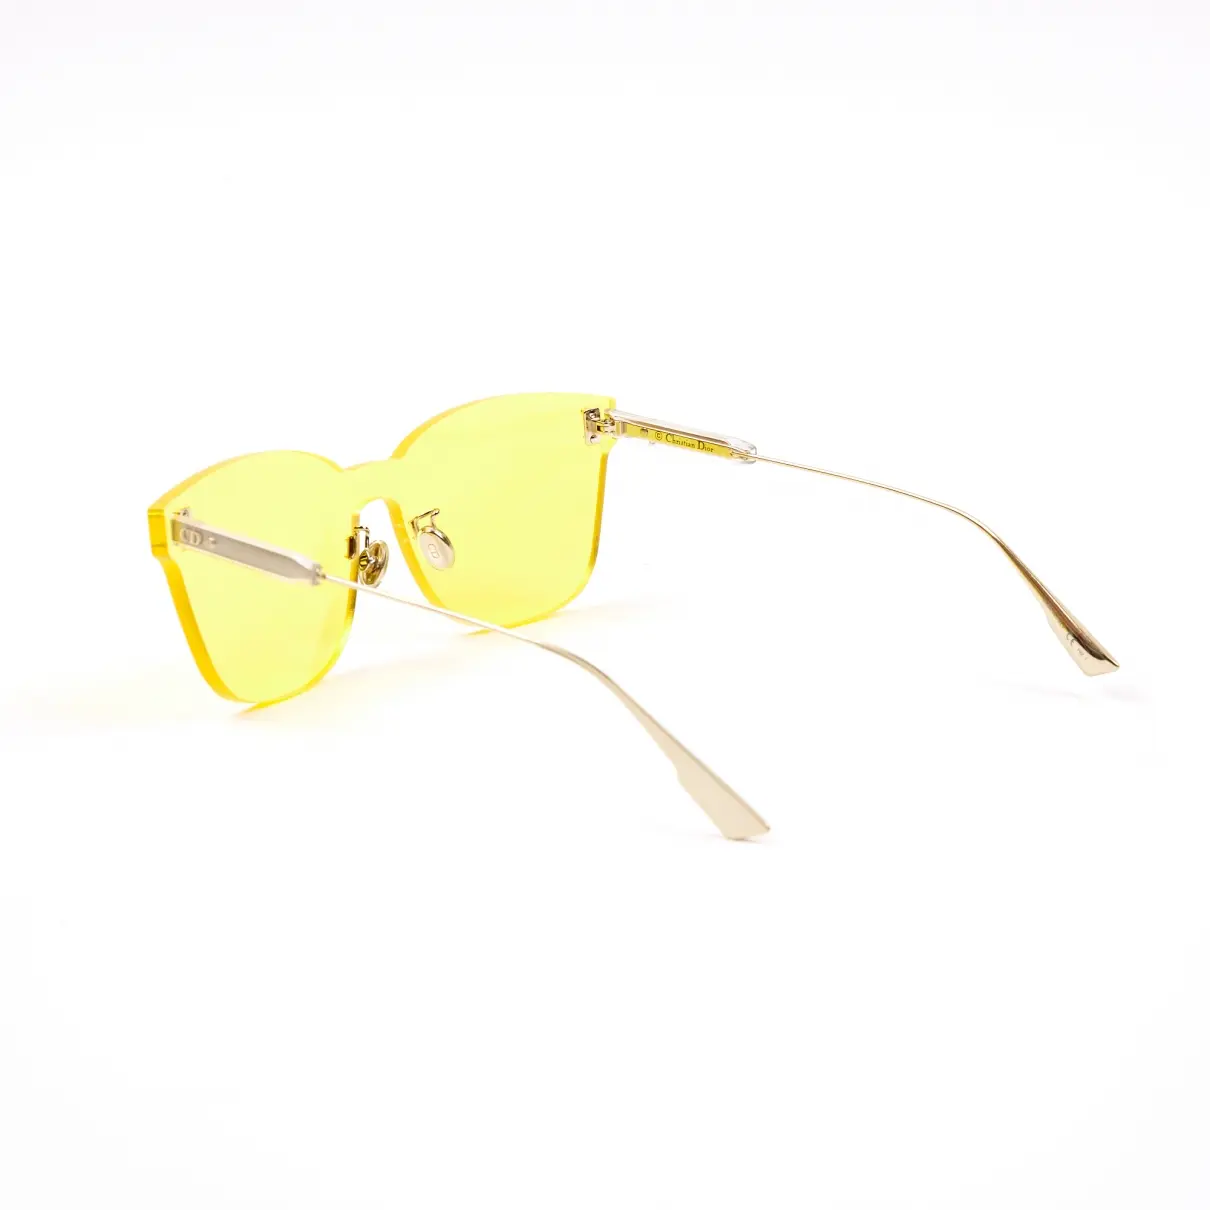 Buy Dior Color Quake 2 sunglasses online